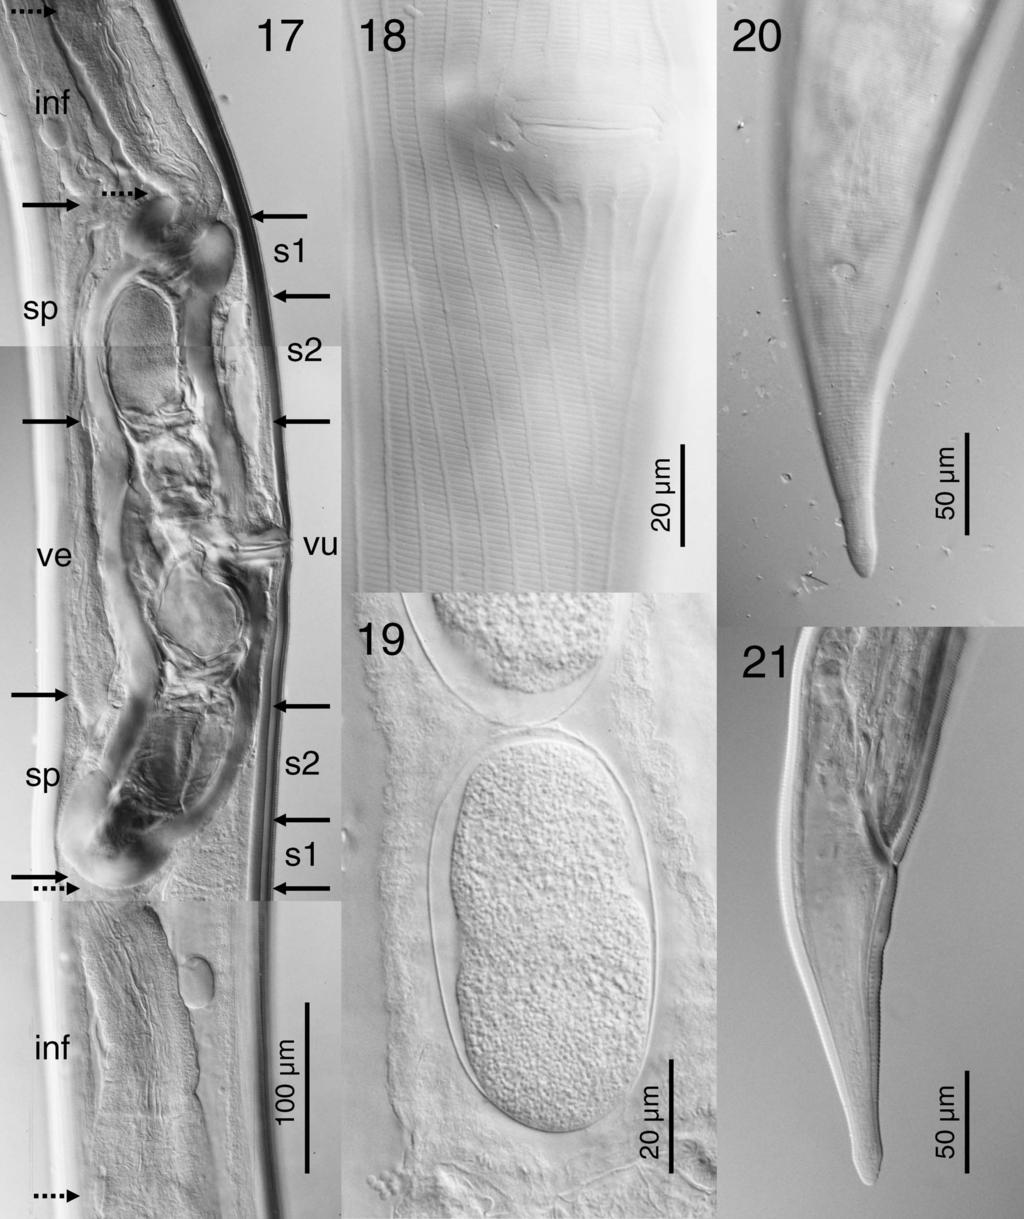 HOBERG ET AL. AFRICAN OSTERTAGIINAE 237 FIGURES 17 21. Africanastrongylus buceros gen. nov. et sp. nov., showing structural characters of females based on photomicrographs.